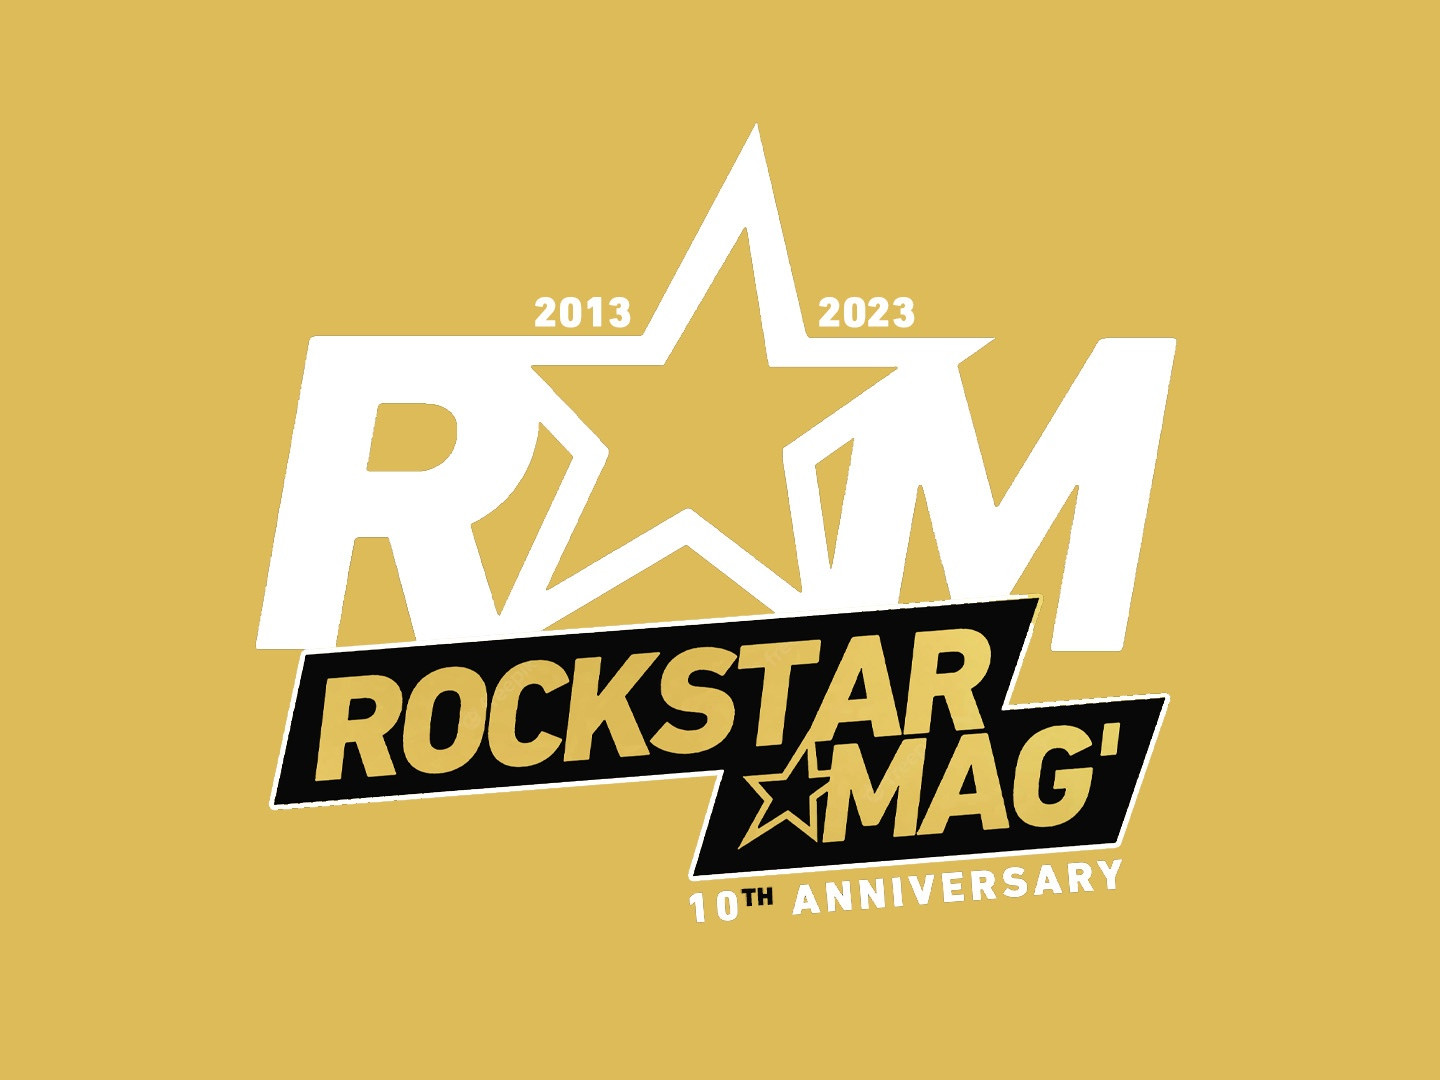 Rockstar Mag' 10th Anniversary